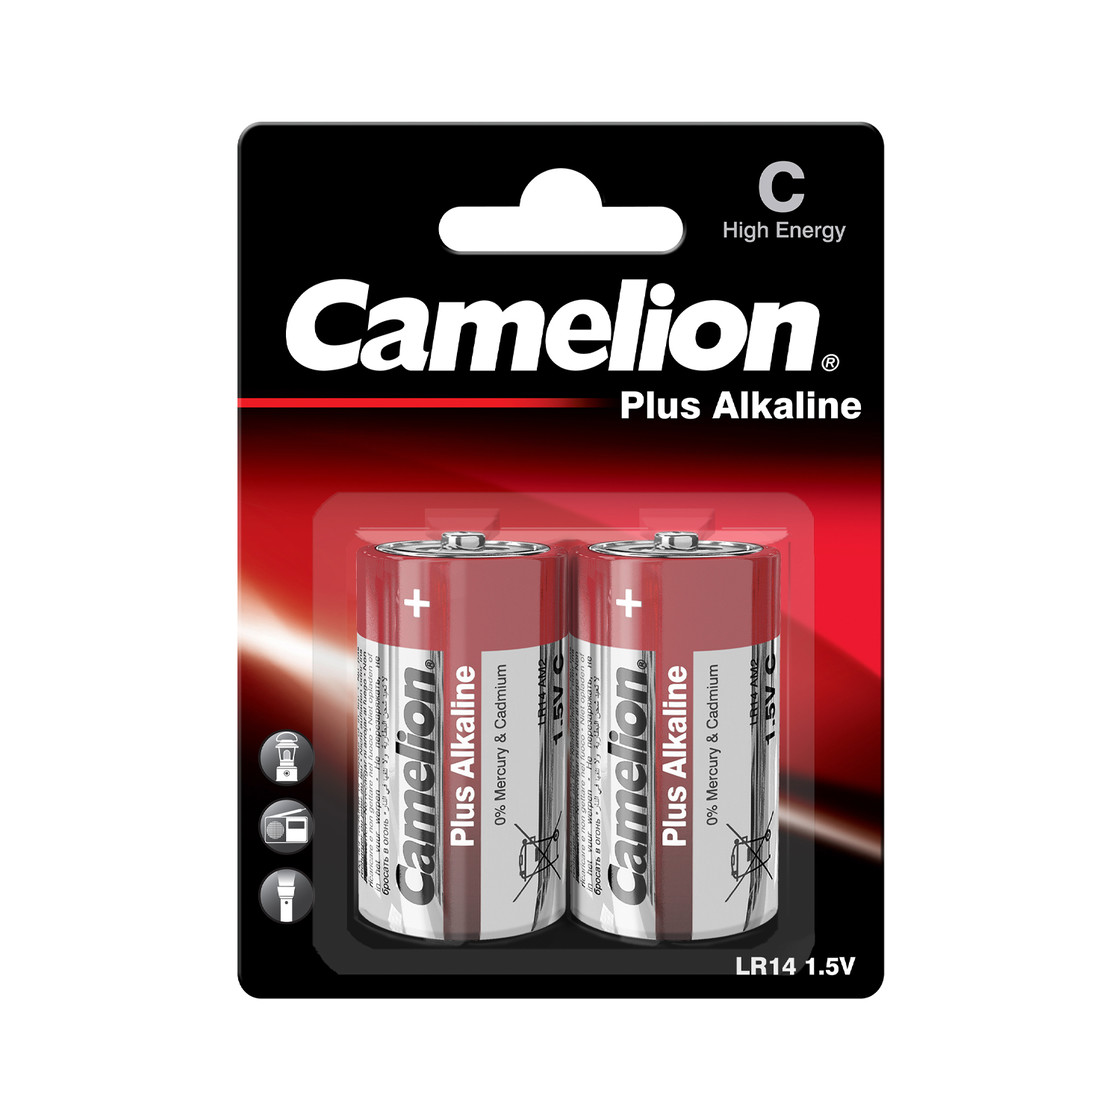 Camelion Plus Alkaline Batterien LR14 C 2er Pack